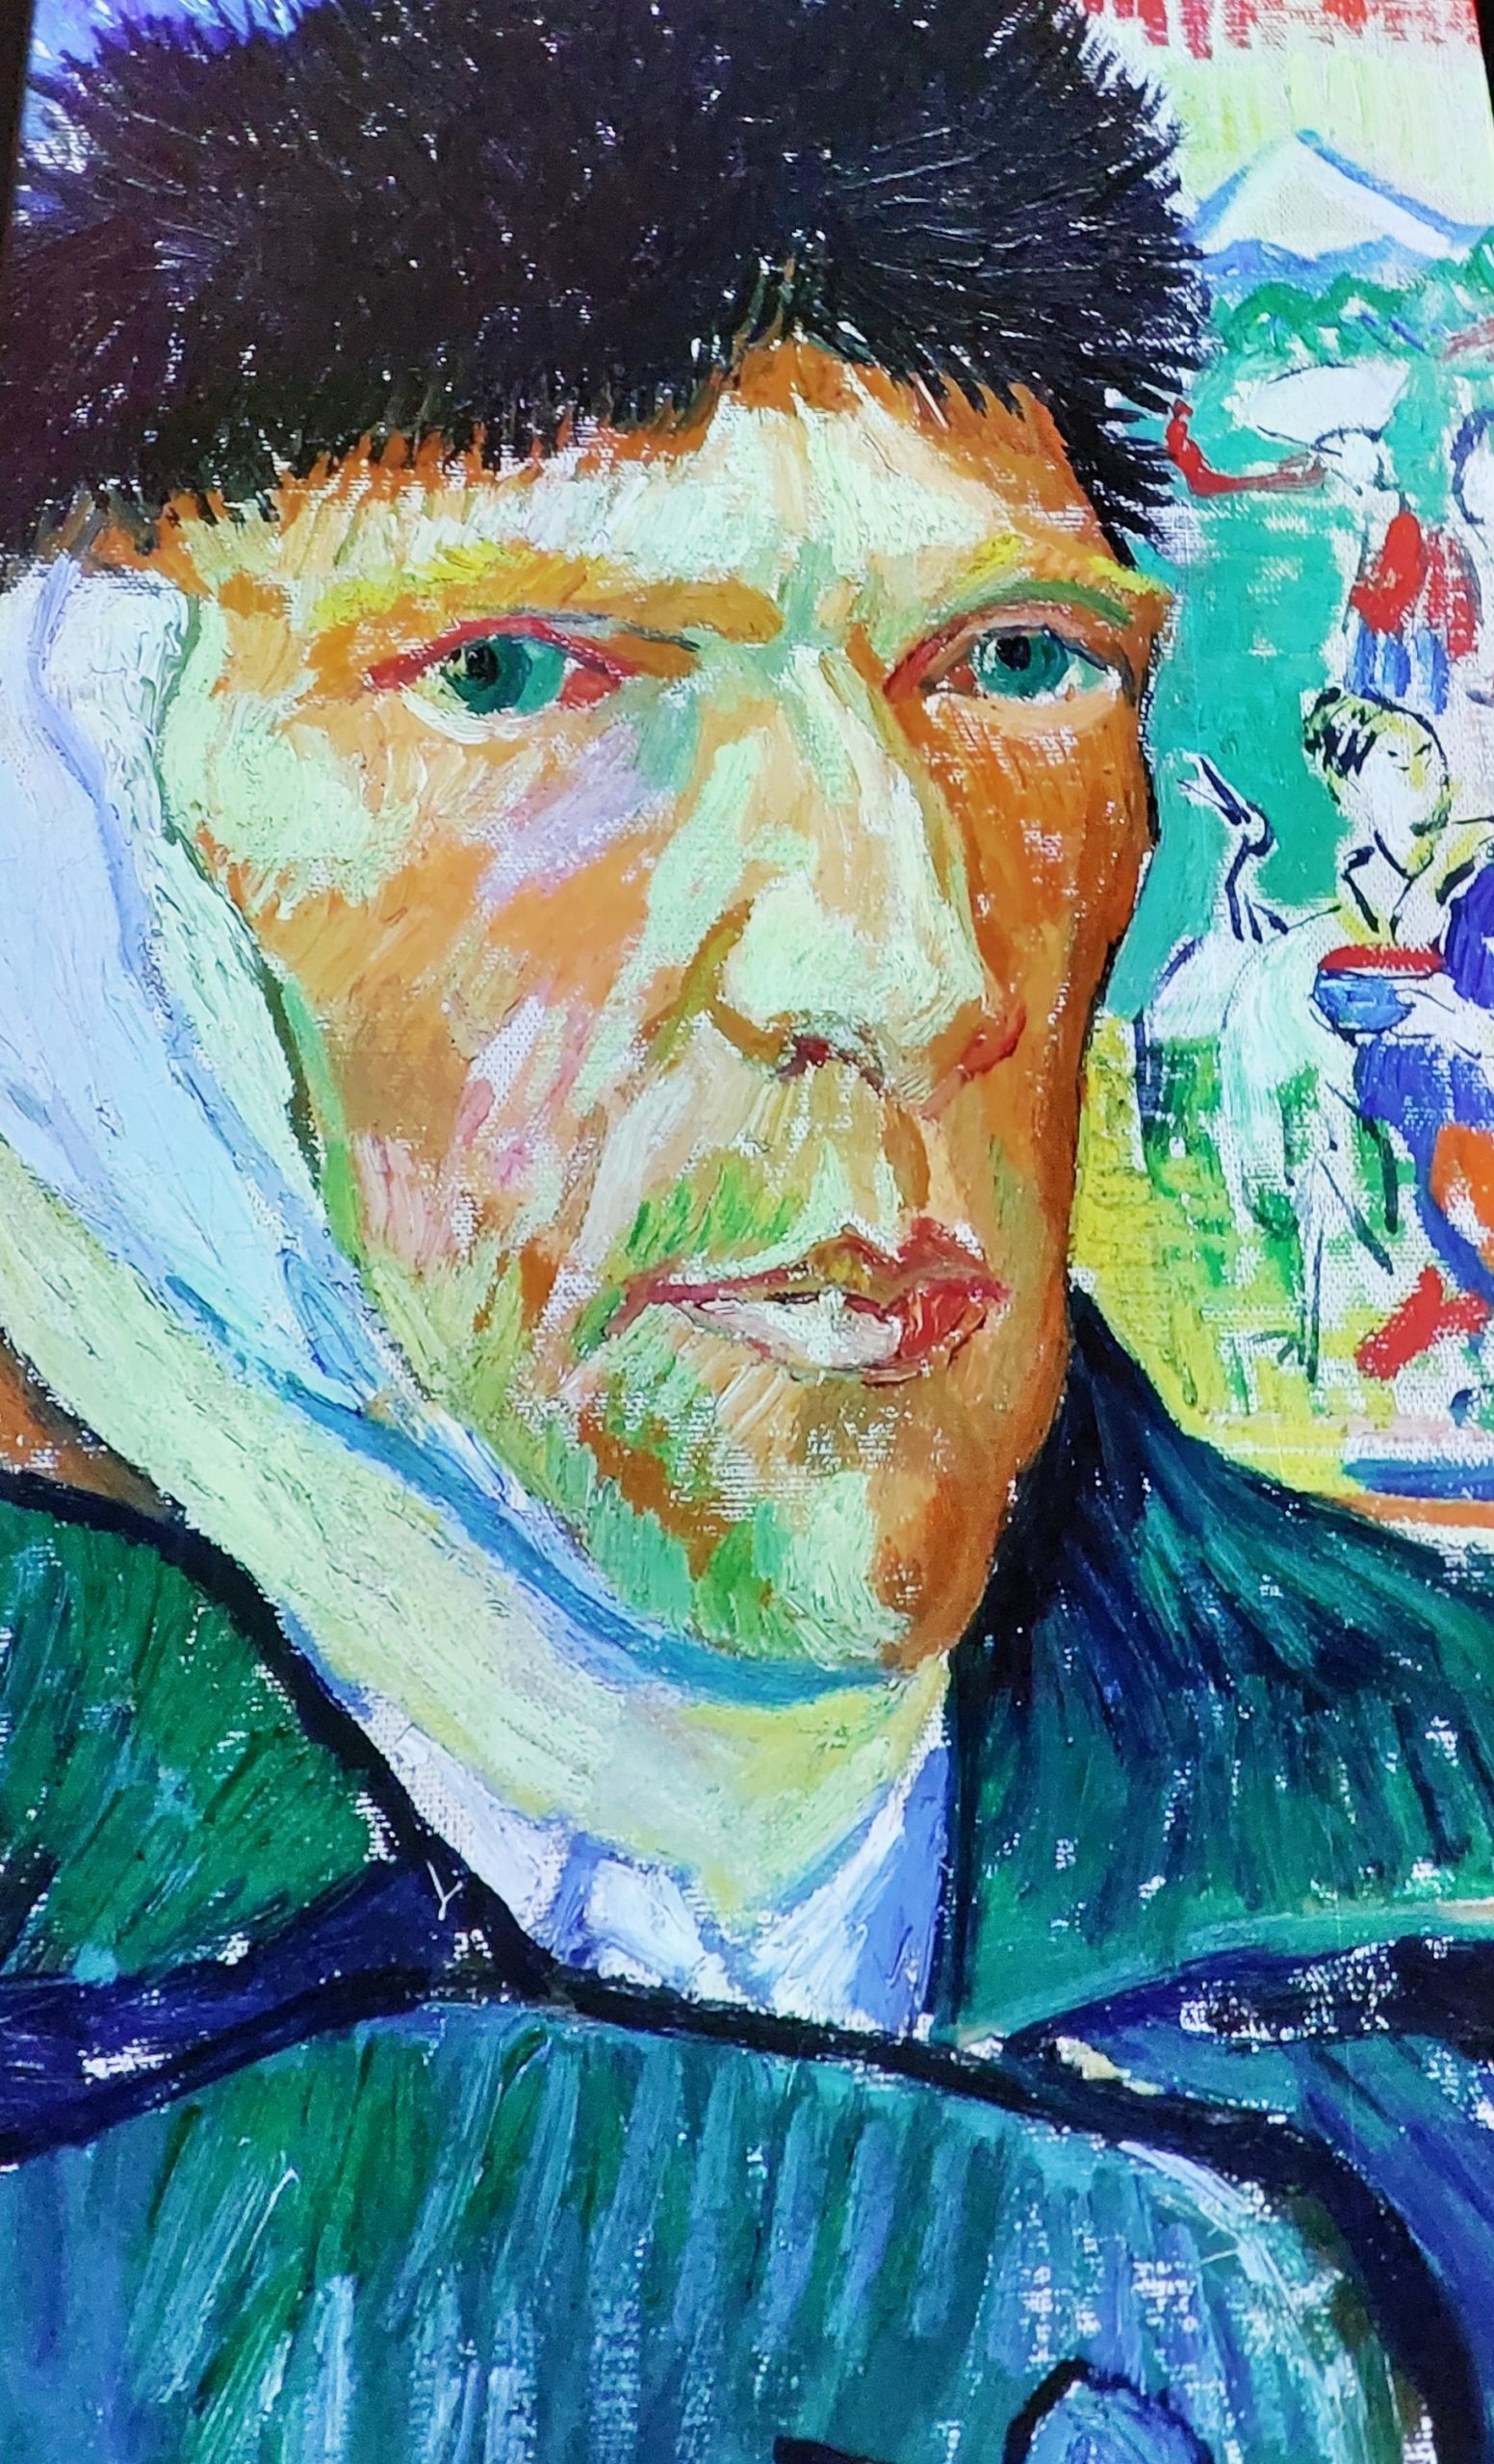 <img src="Van.jpg" alt="Van Gogh self portrait bandaged ear"/> 